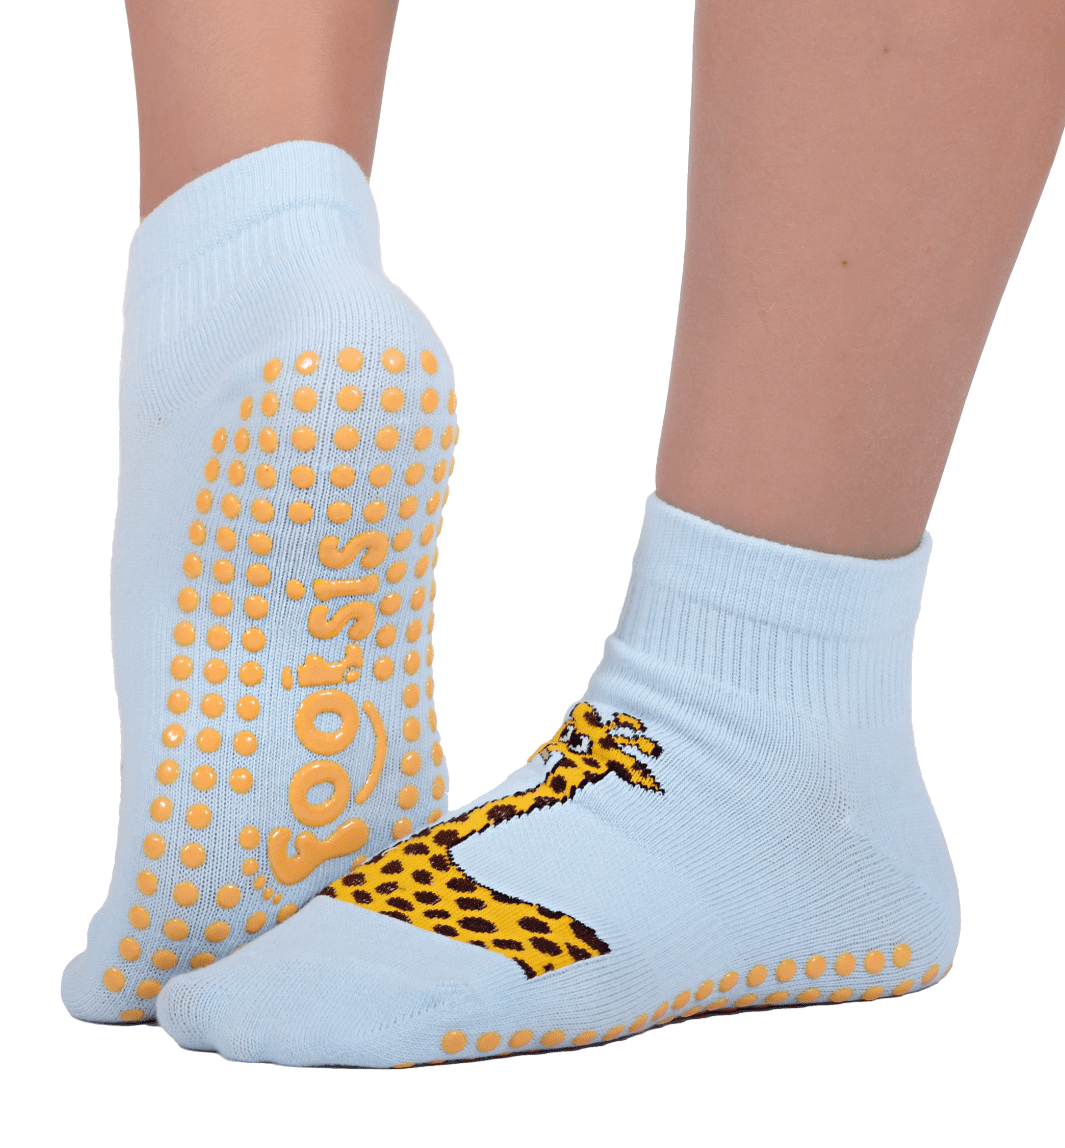 Footsis Non Slip Grip Socks for Yoga, Pilates, Barre, Home, Hospital